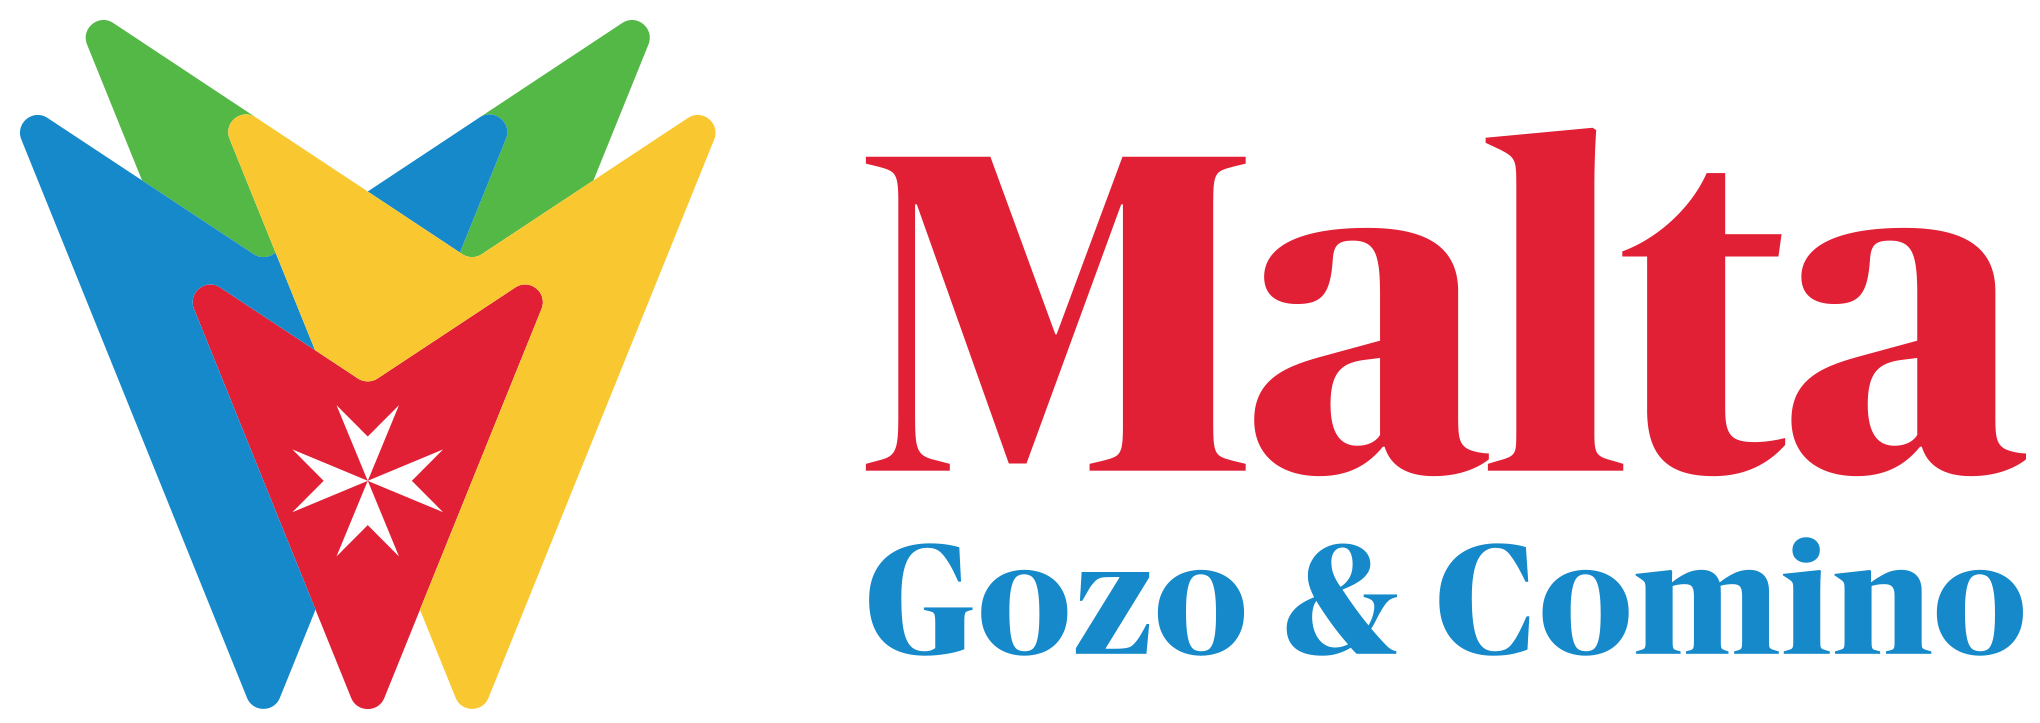 Malta Logo - Brand New: New Logo and Identity for Malta by OLIVER